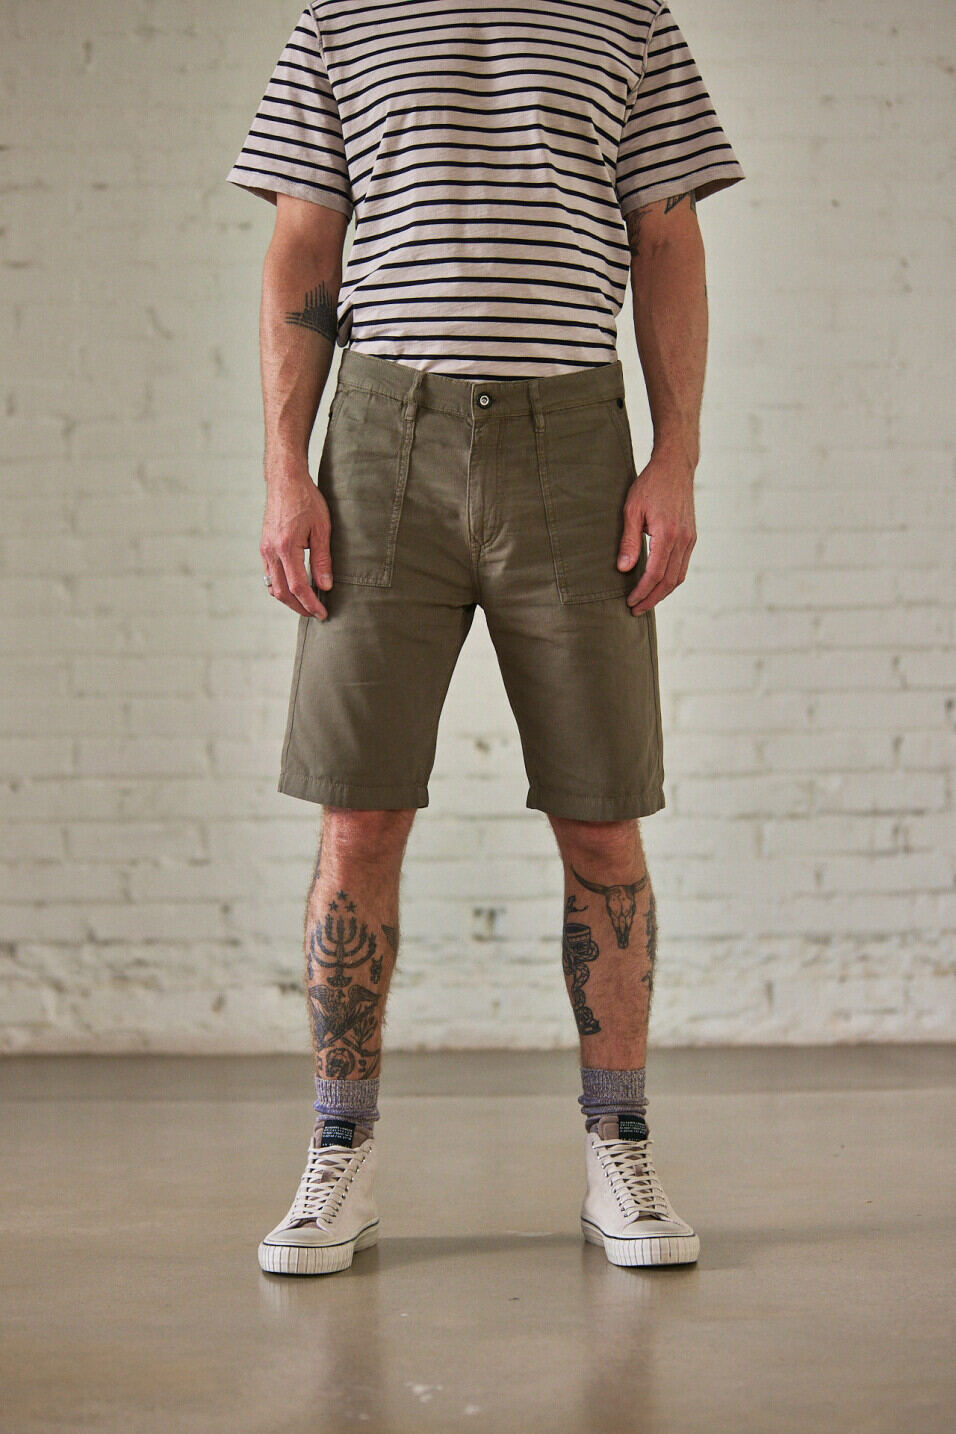 Pantalones cortos cargo Man Bastian Short Utility Dusty olive | Freeman T. Porter